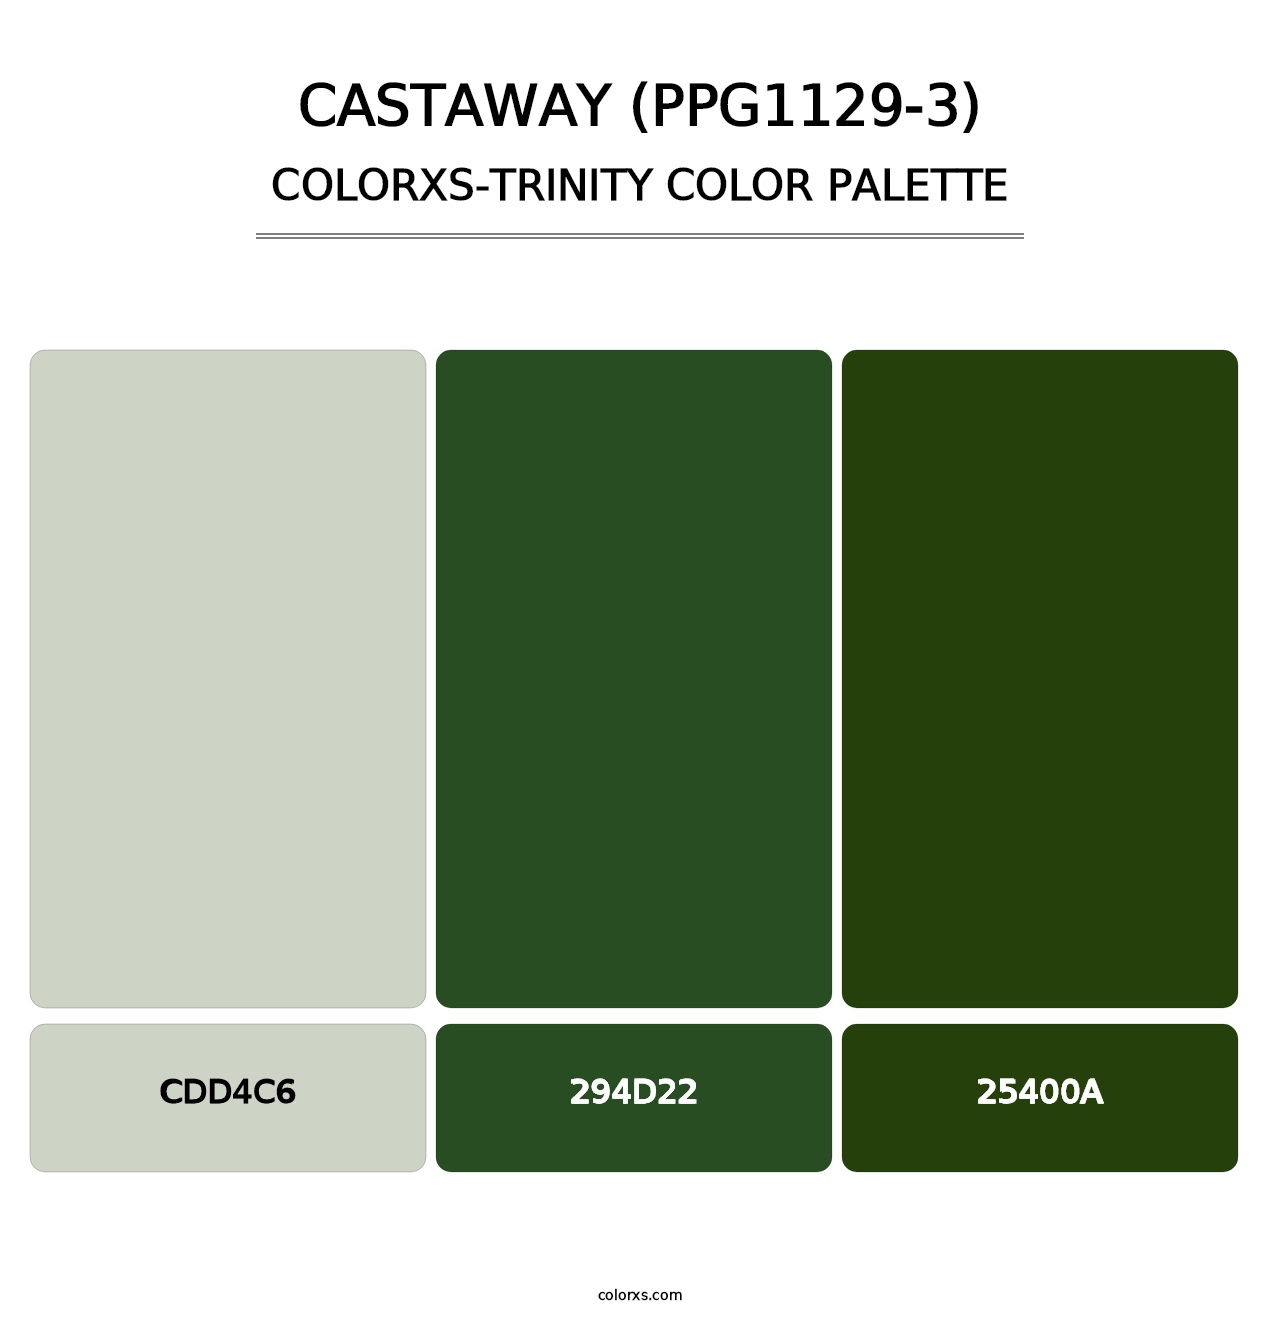 Castaway (PPG1129-3) - Colorxs Trinity Palette